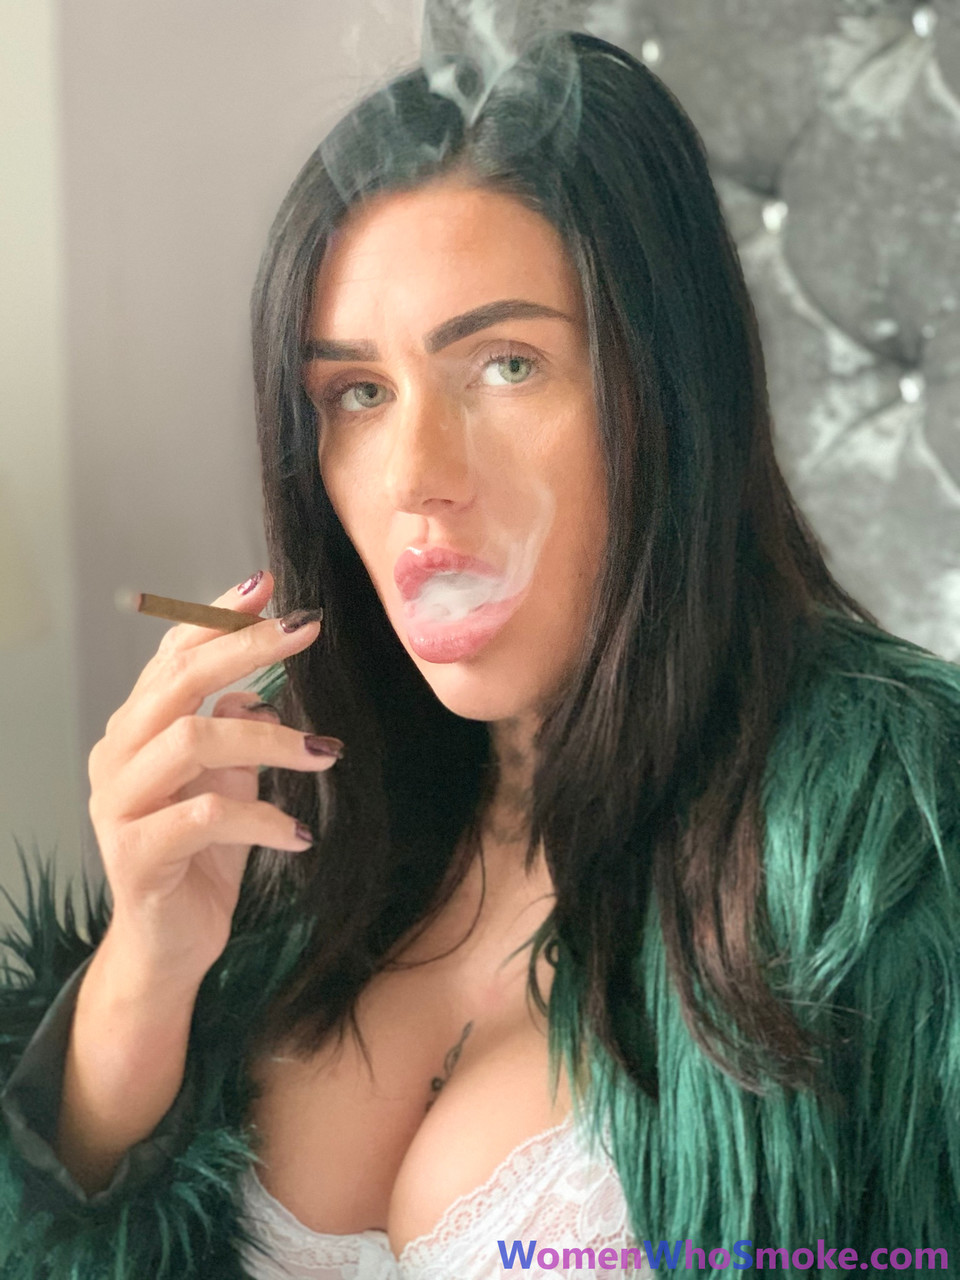 Stunning brunette teases with her big boobs while smoking in sexy lingerie porno fotoğrafı #426607878 | Women Who Smoke Pics, Smoking, mobil porno